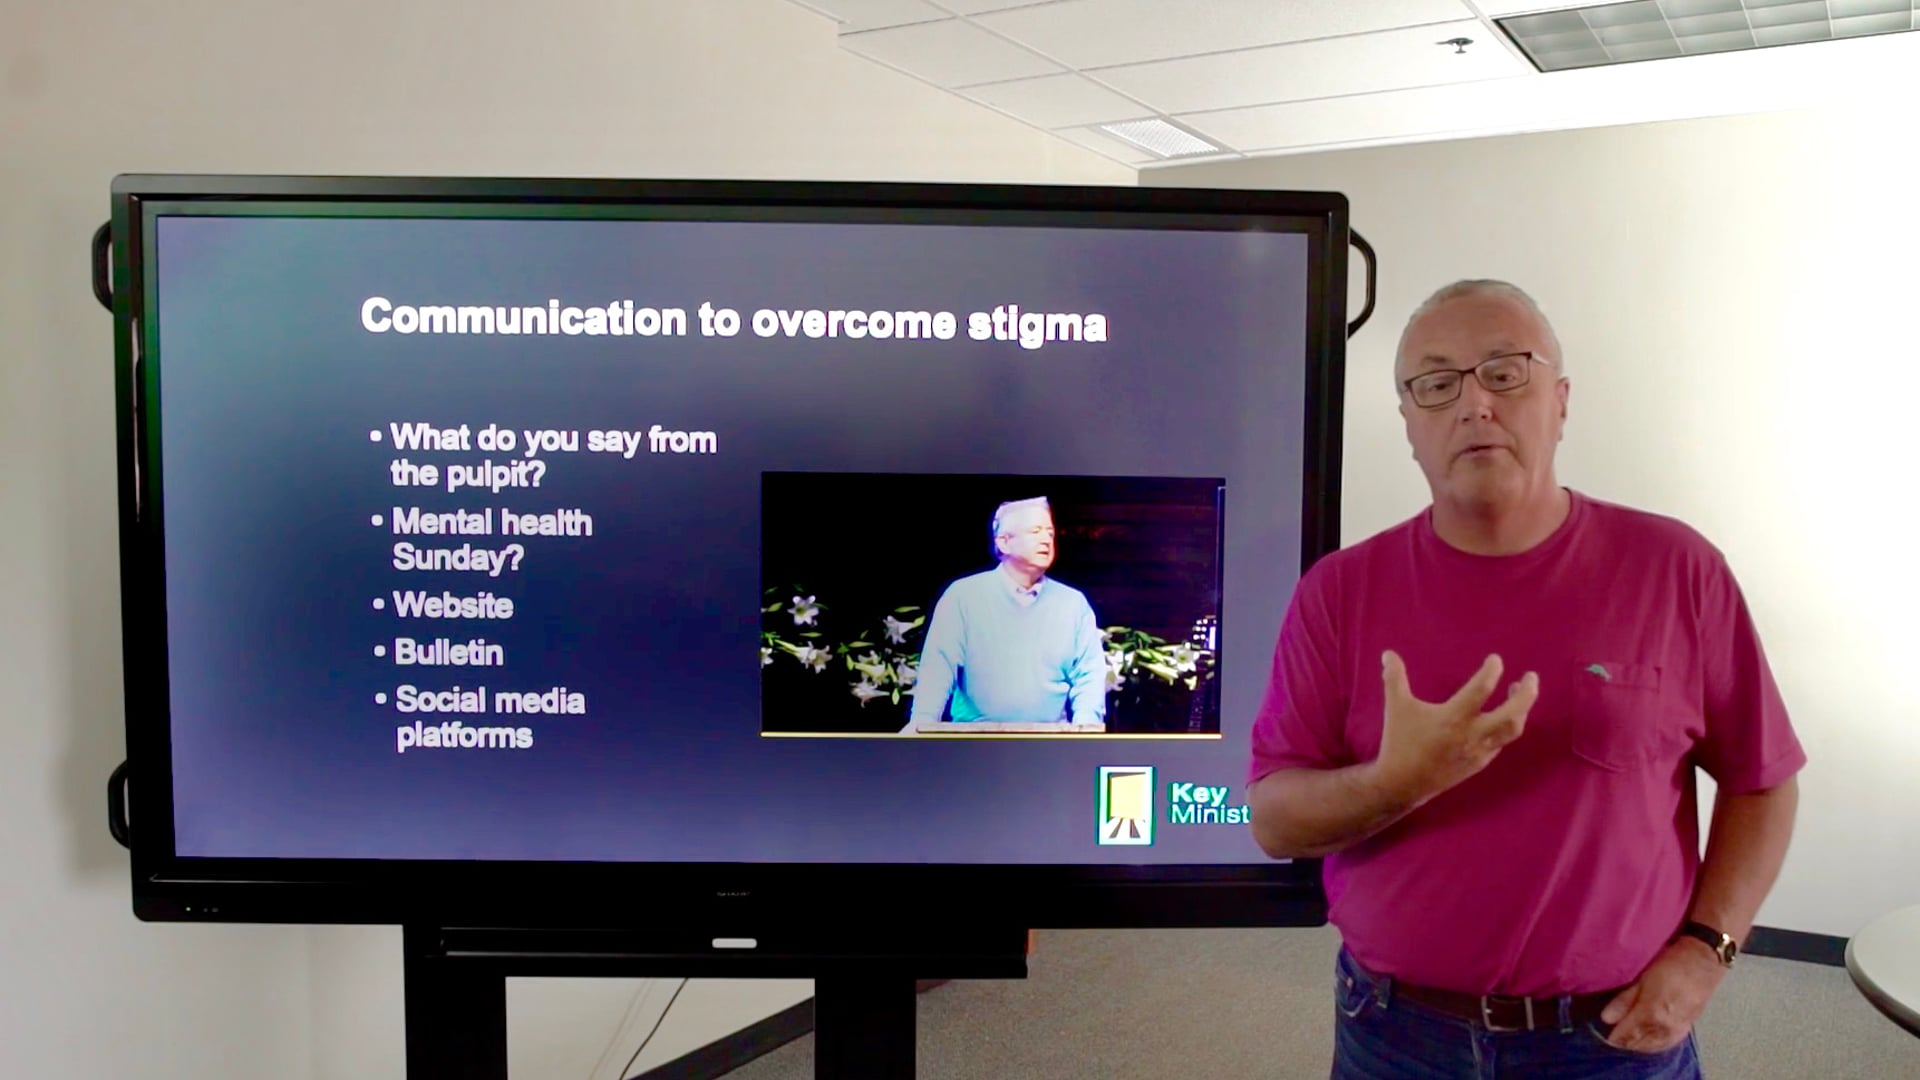 man teaching on mental health stigma in church using screen